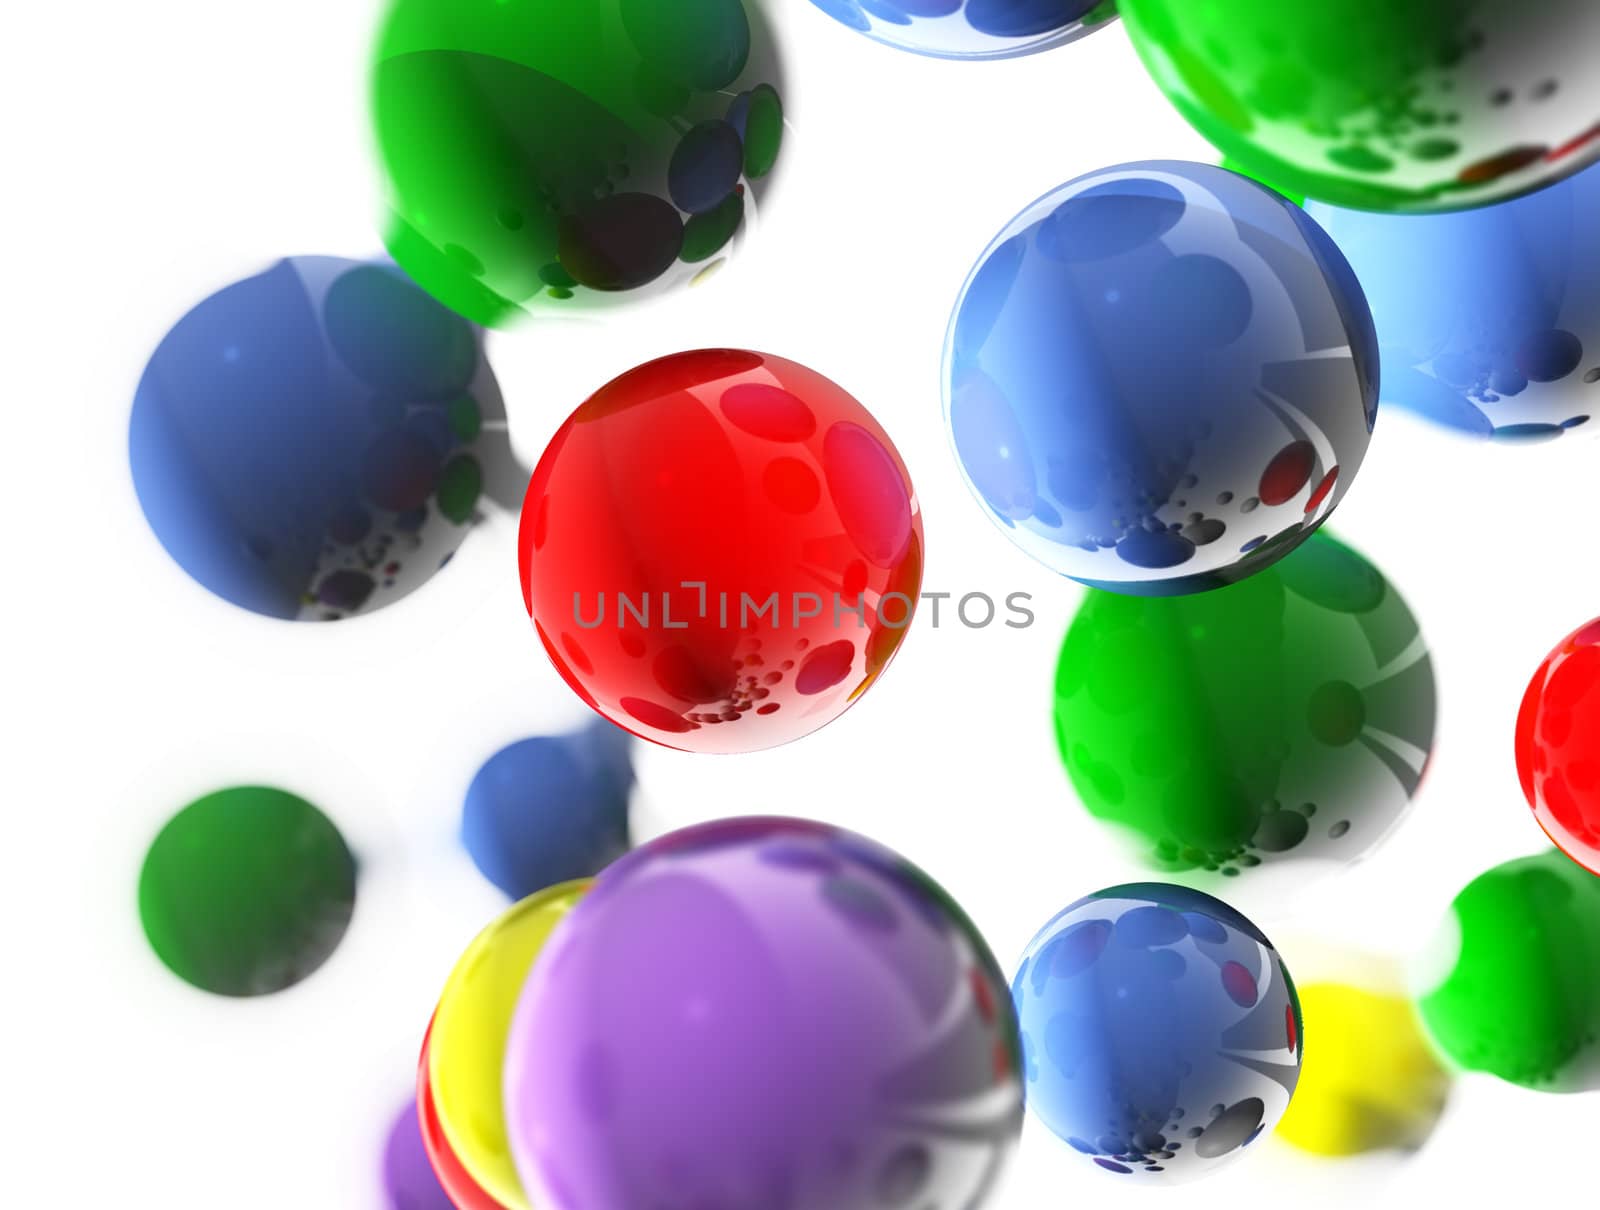 Colored balls by carloscastilla